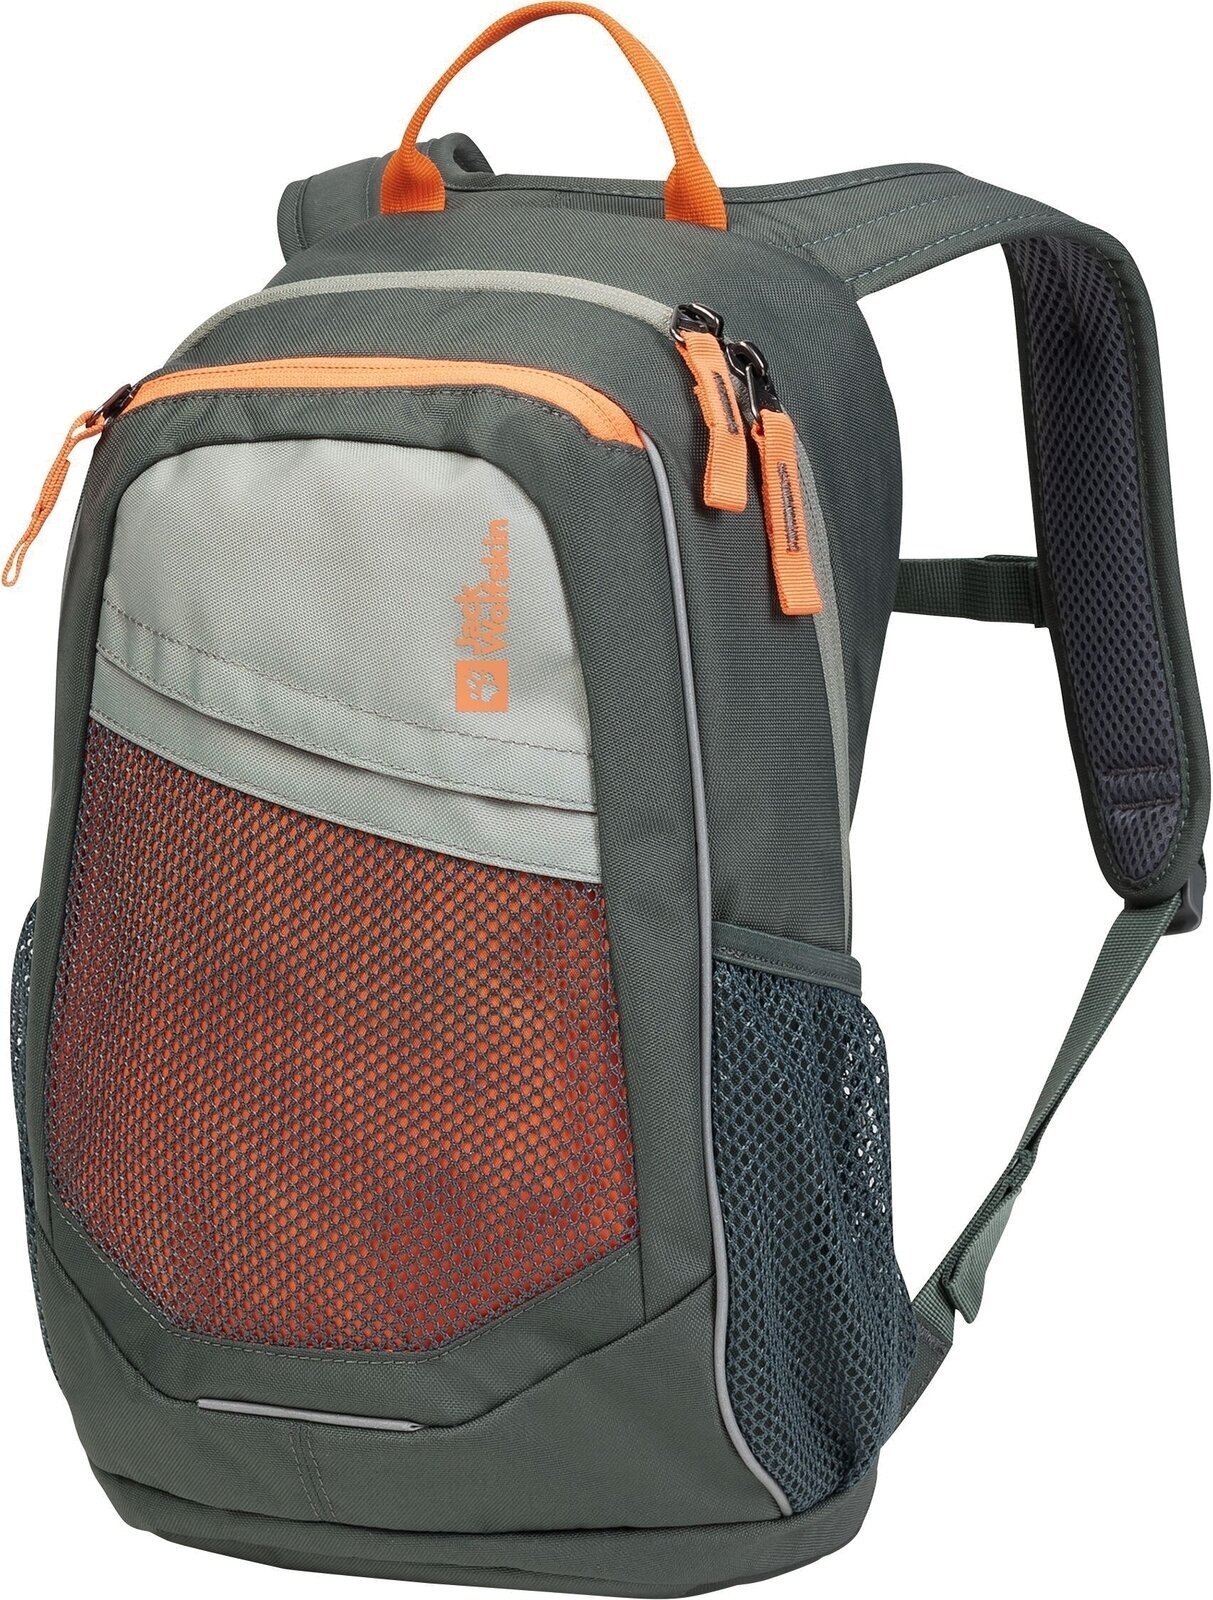 Outdoor Backpack Jack Wolfskin Track Jack Slate Green One Size Outdoor Backpack